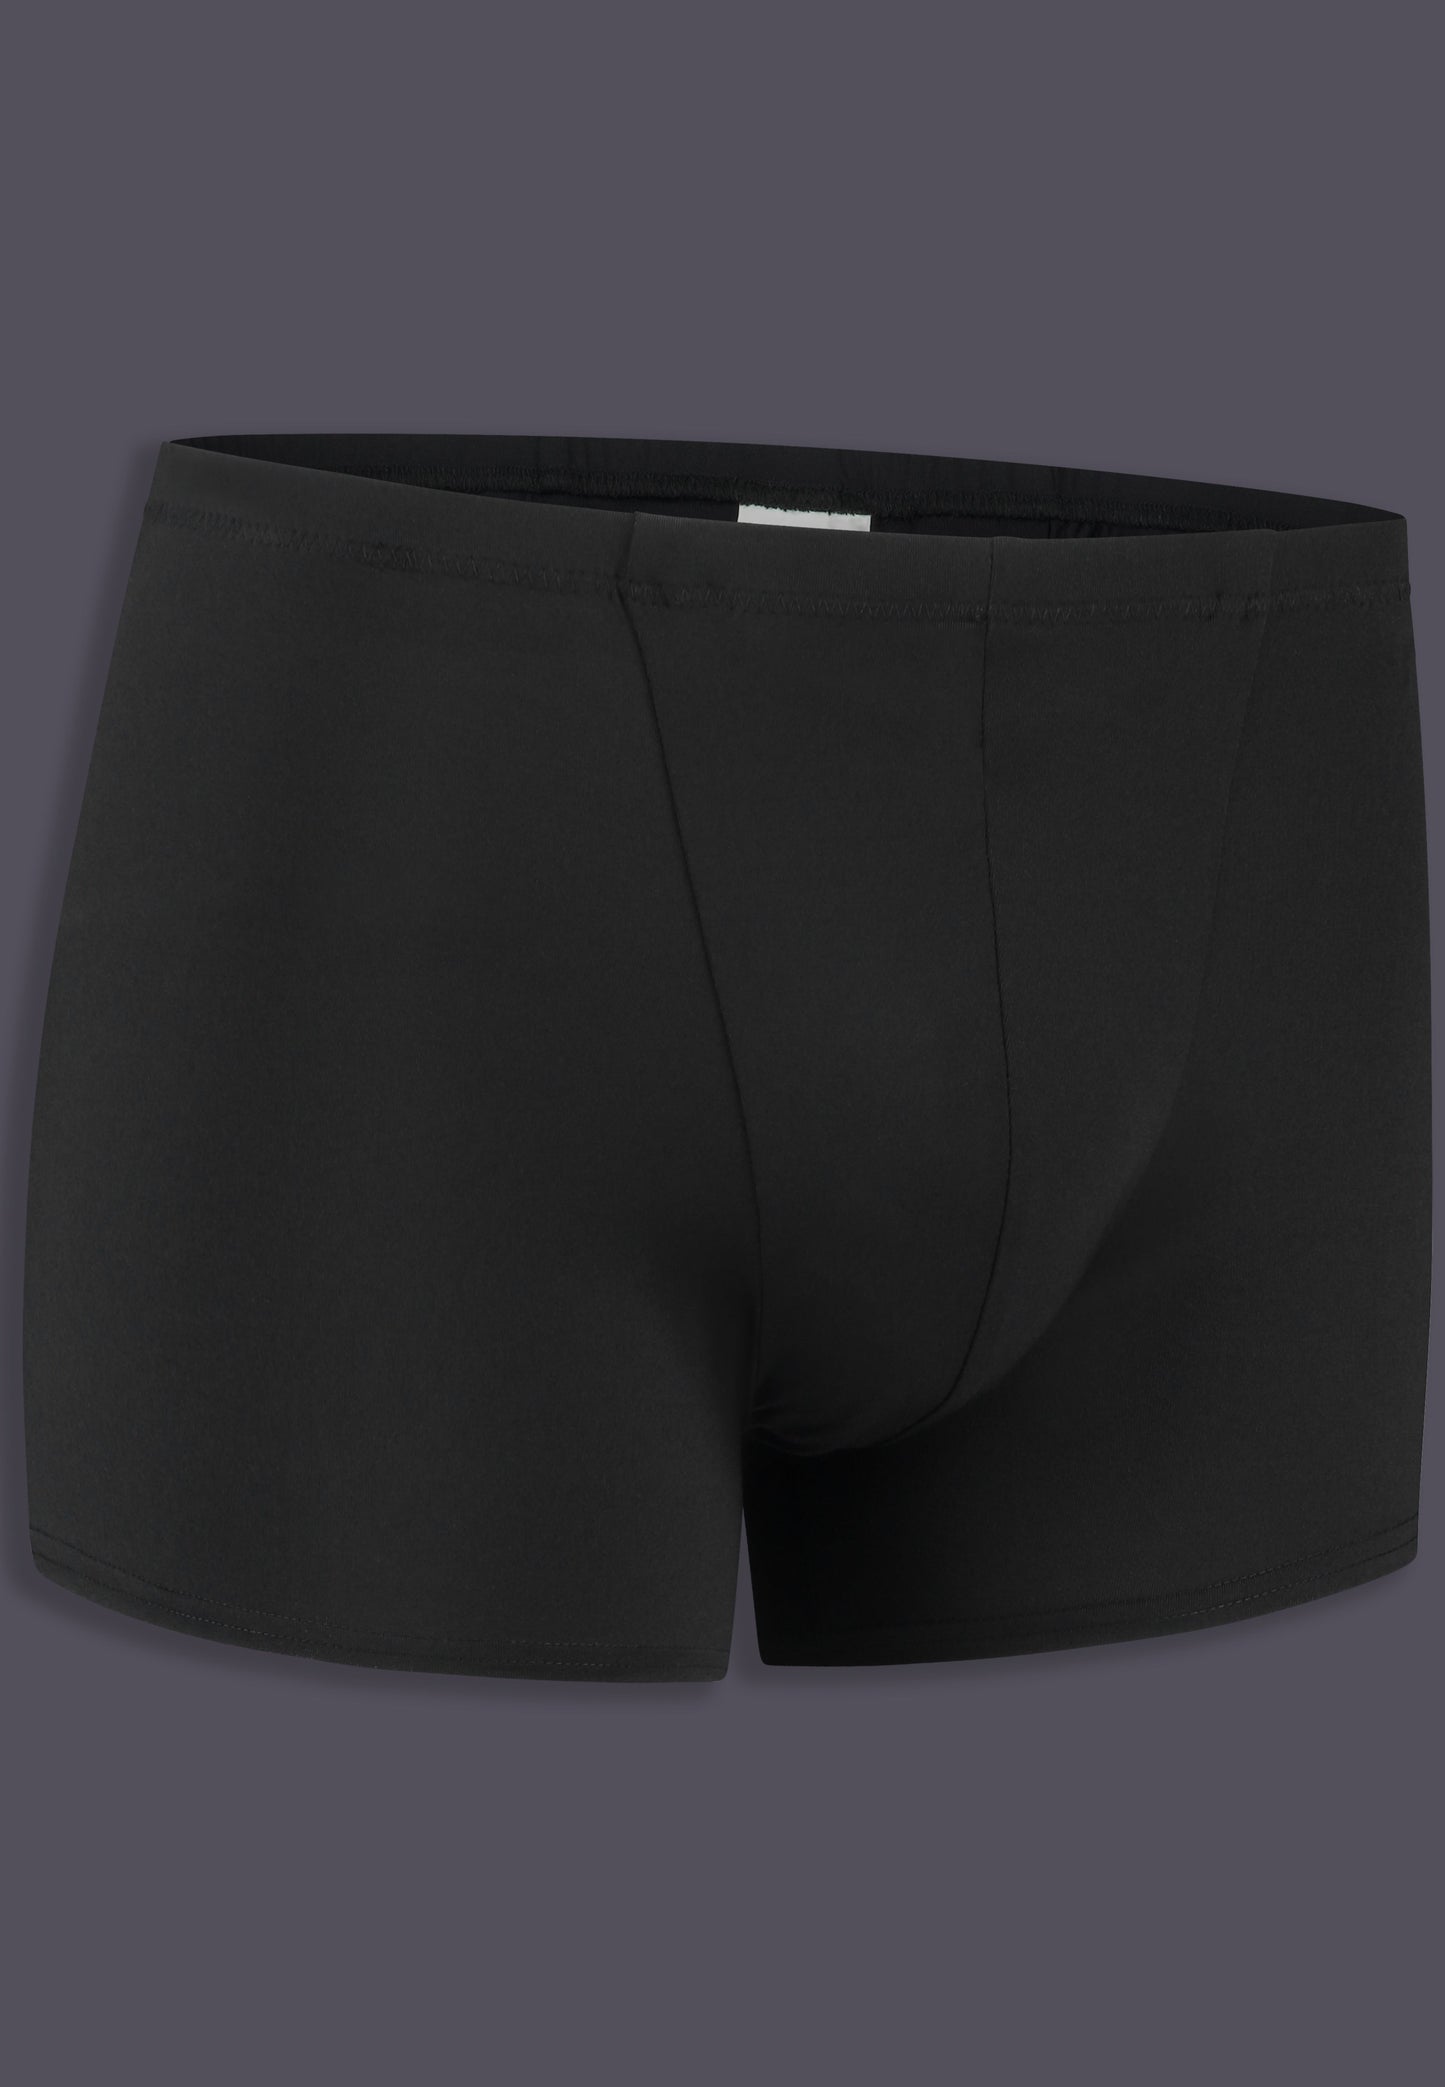 Boxershorts black, side right, product image